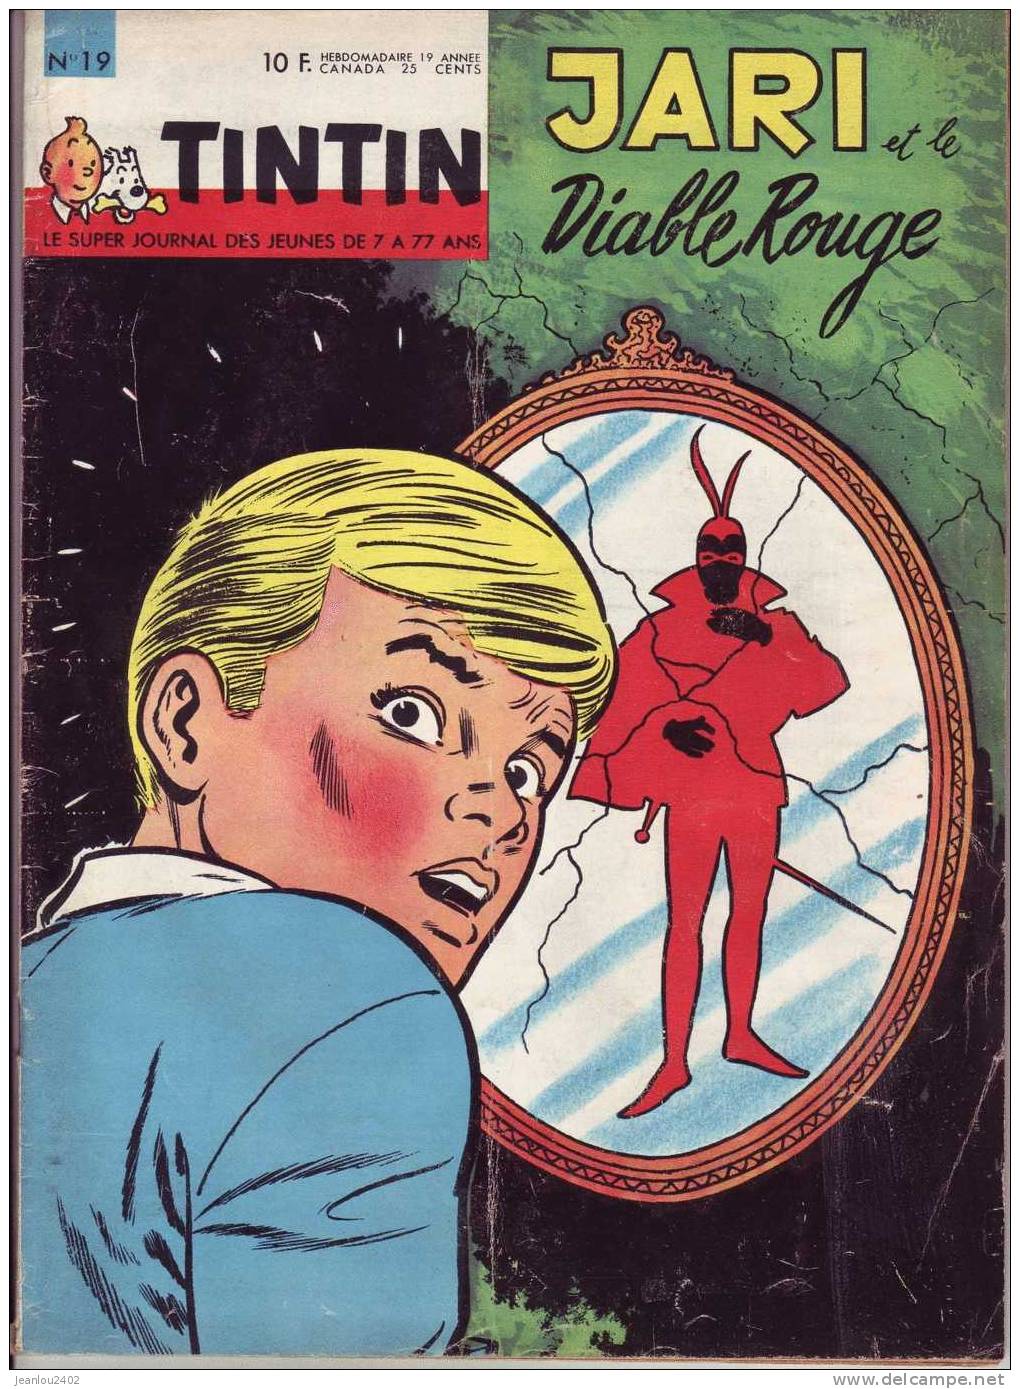 TINTIN N° 19 DU 12 MAI 1964?? - Tintin